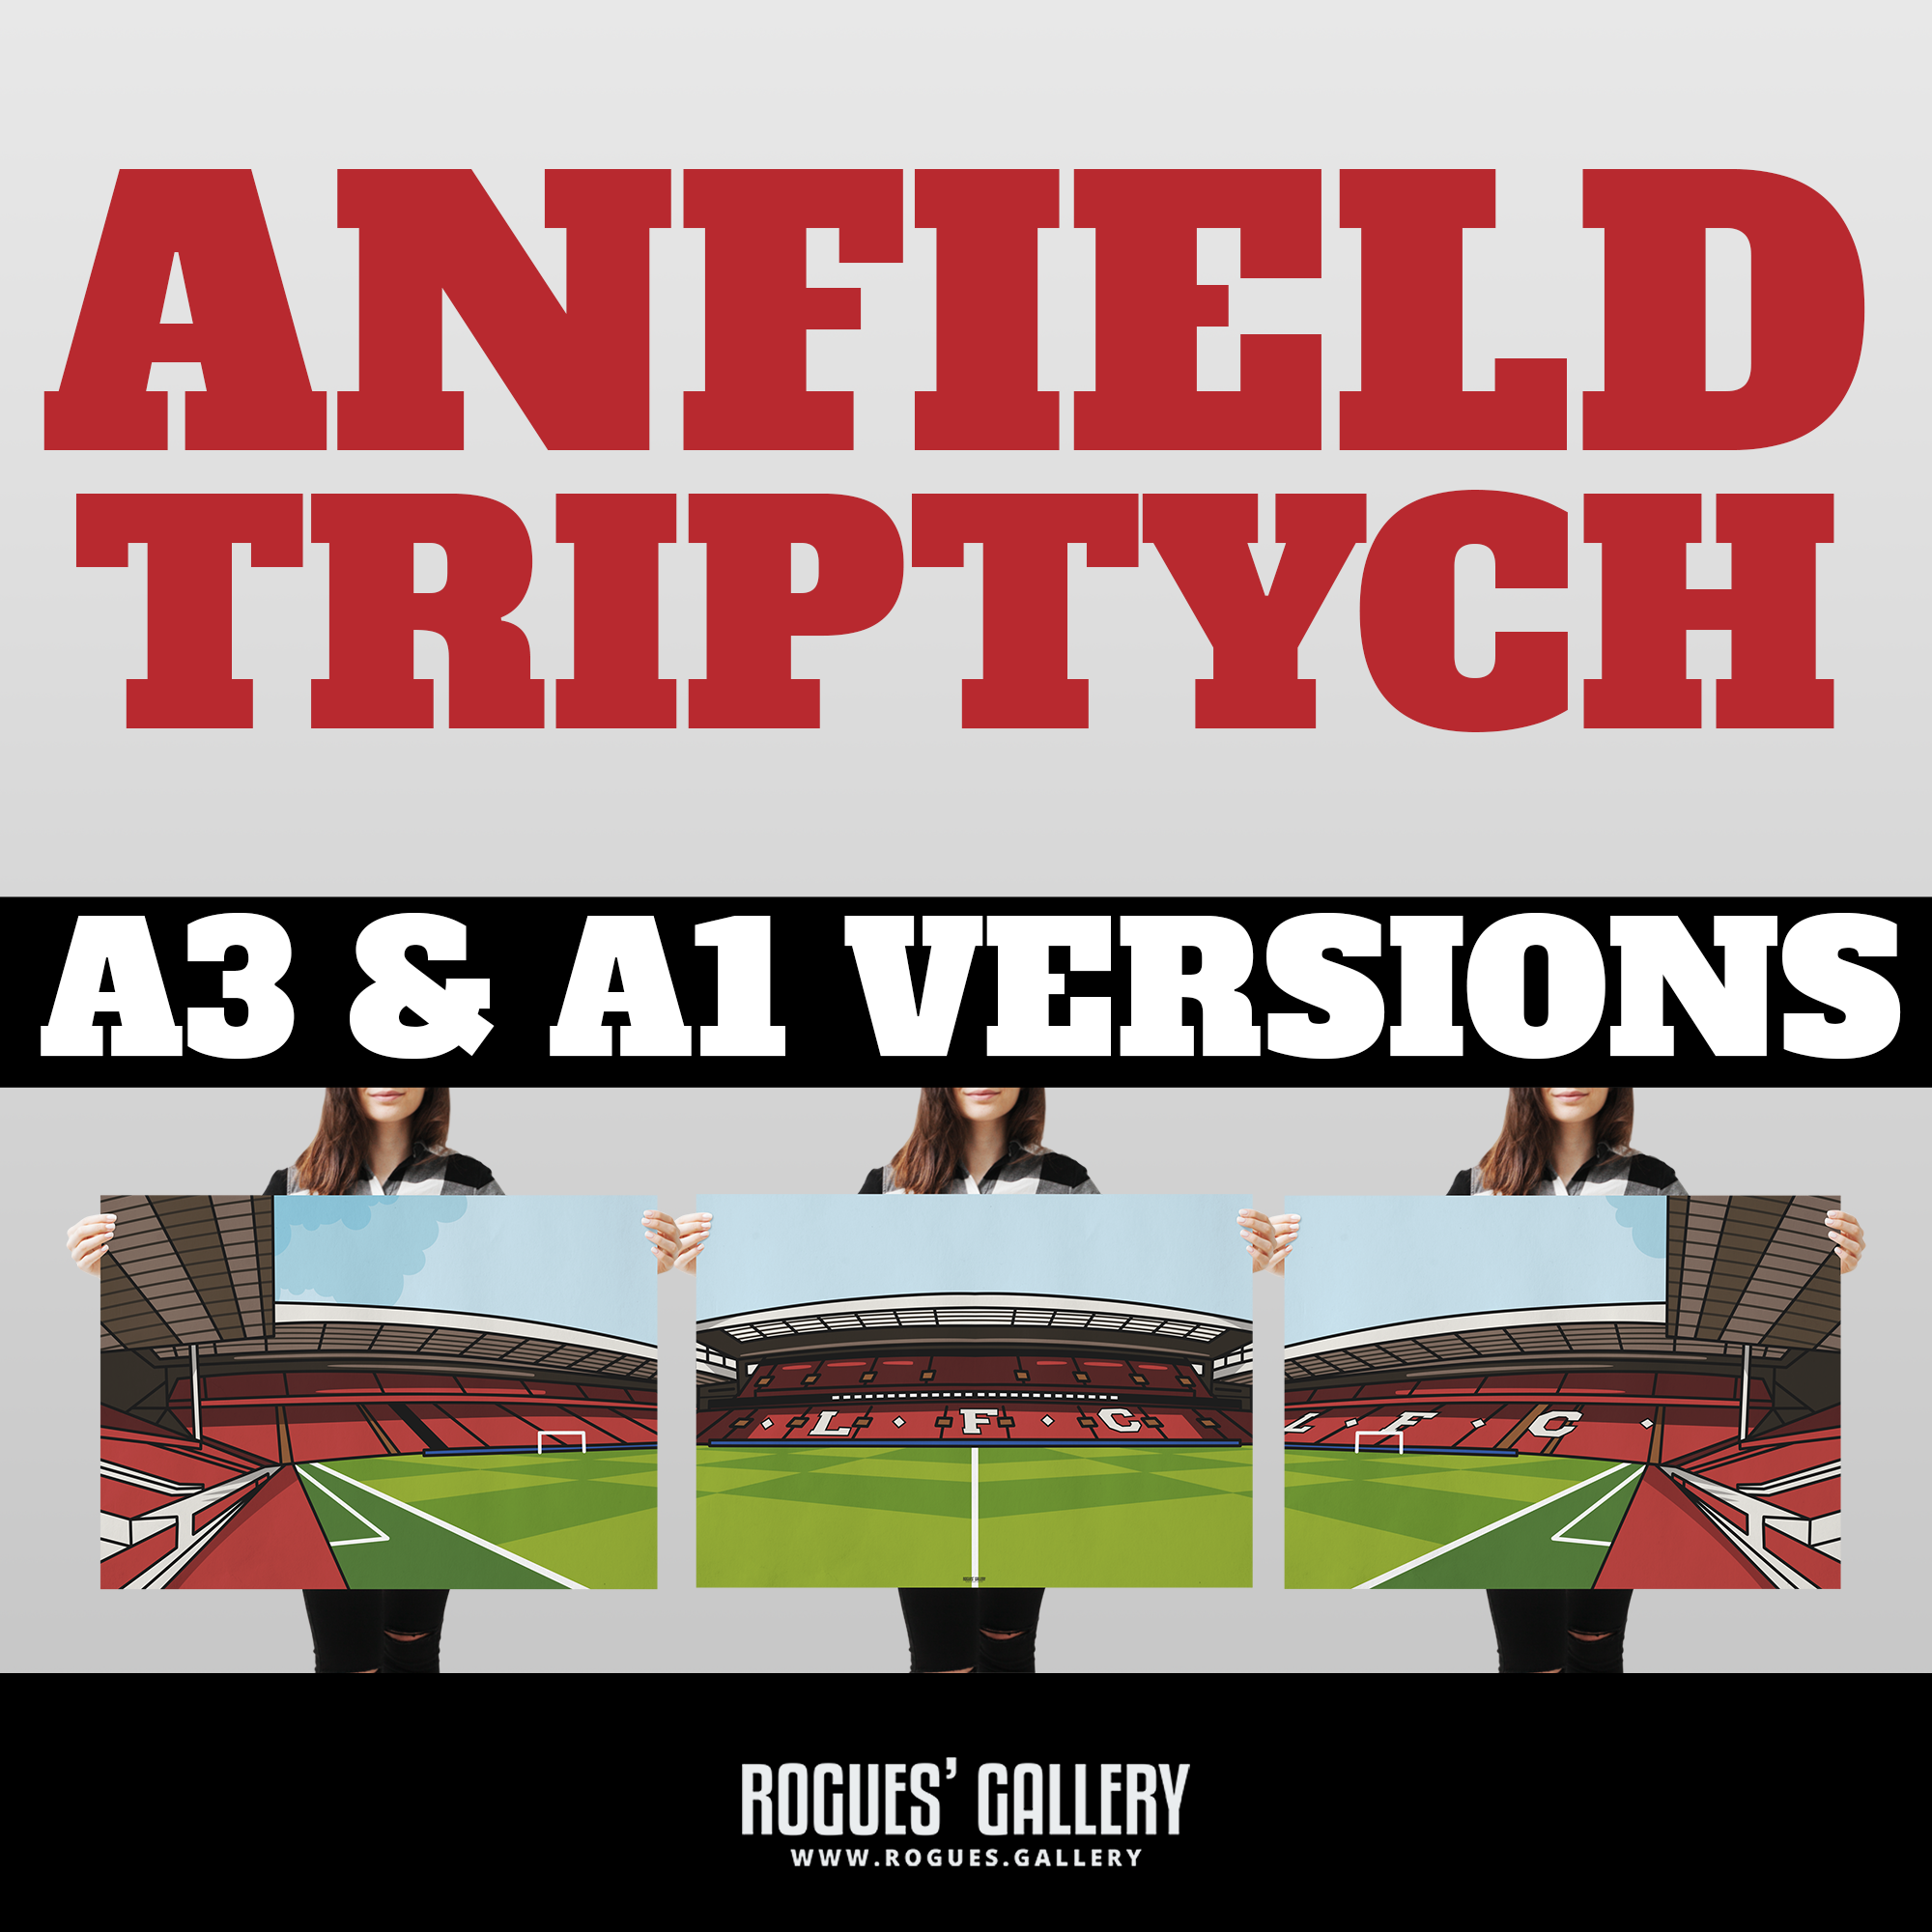 Anfield Liverpool FC The Kop triptych A3 art print